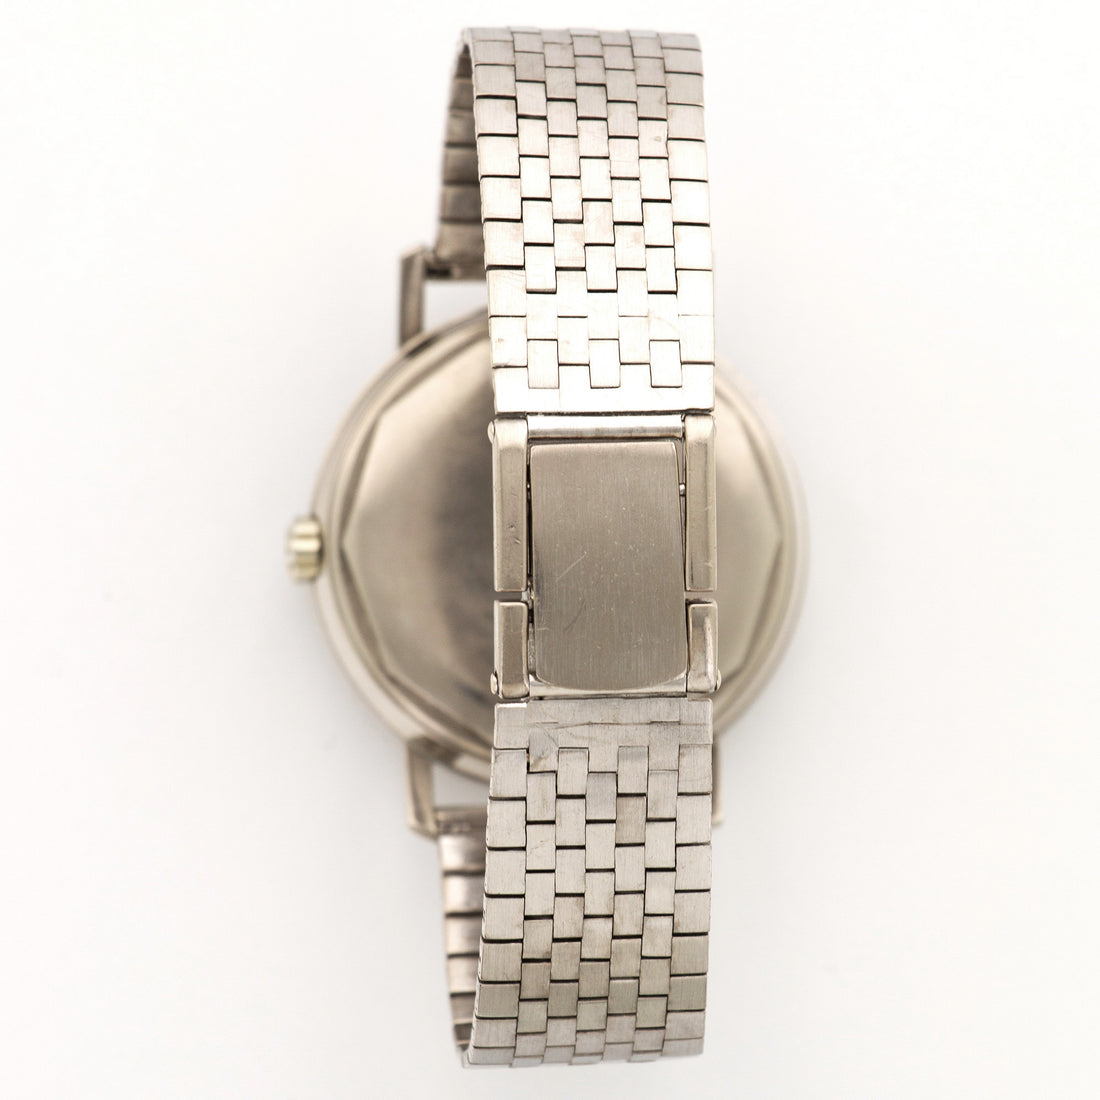 Patek Philippe White Gold Automatic Calatrava Watch Ref. 3445